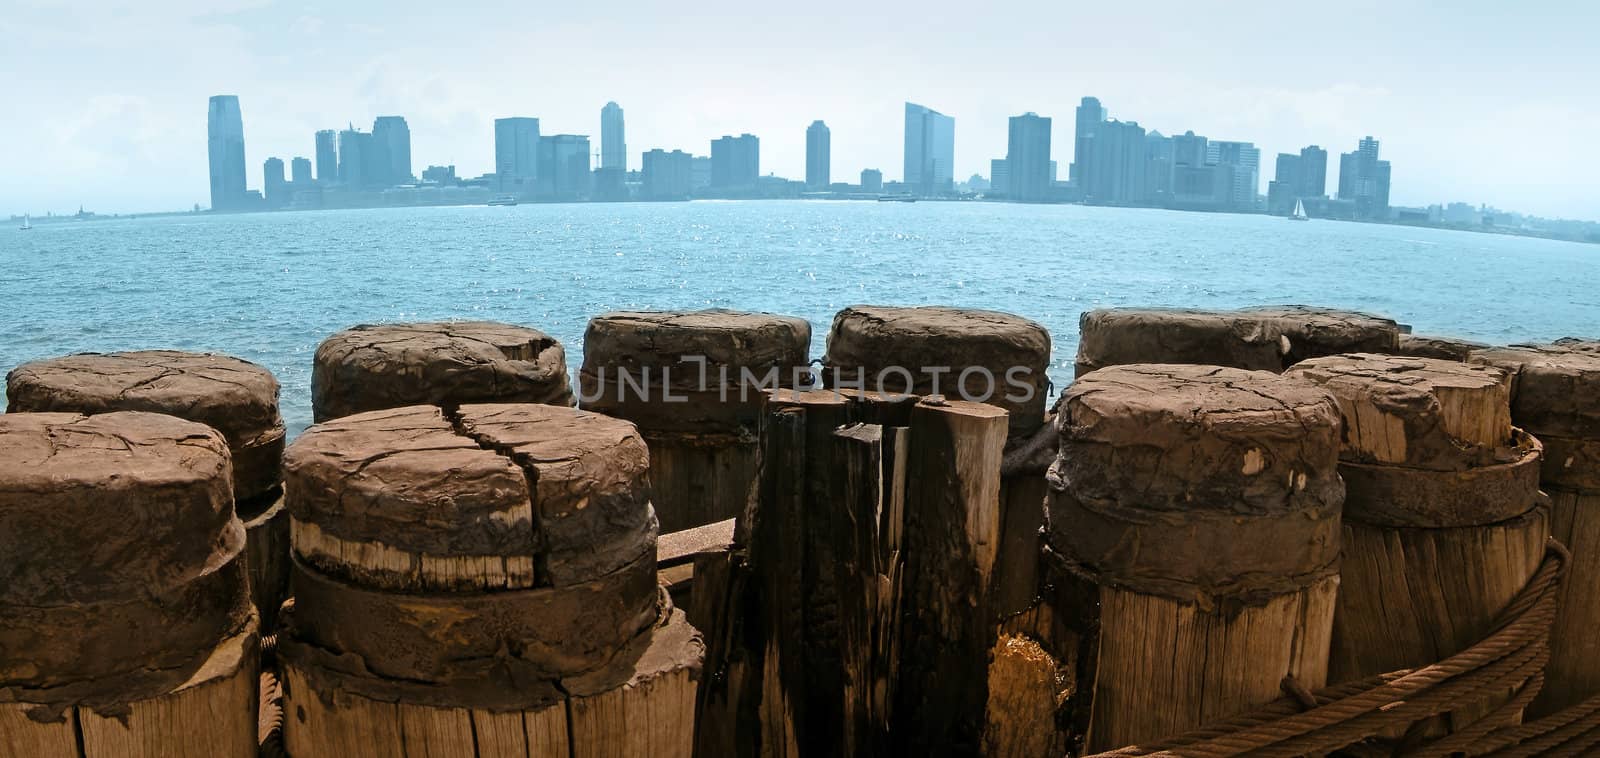 Jersey City viewed from Manhattan, wooden pier in foreground